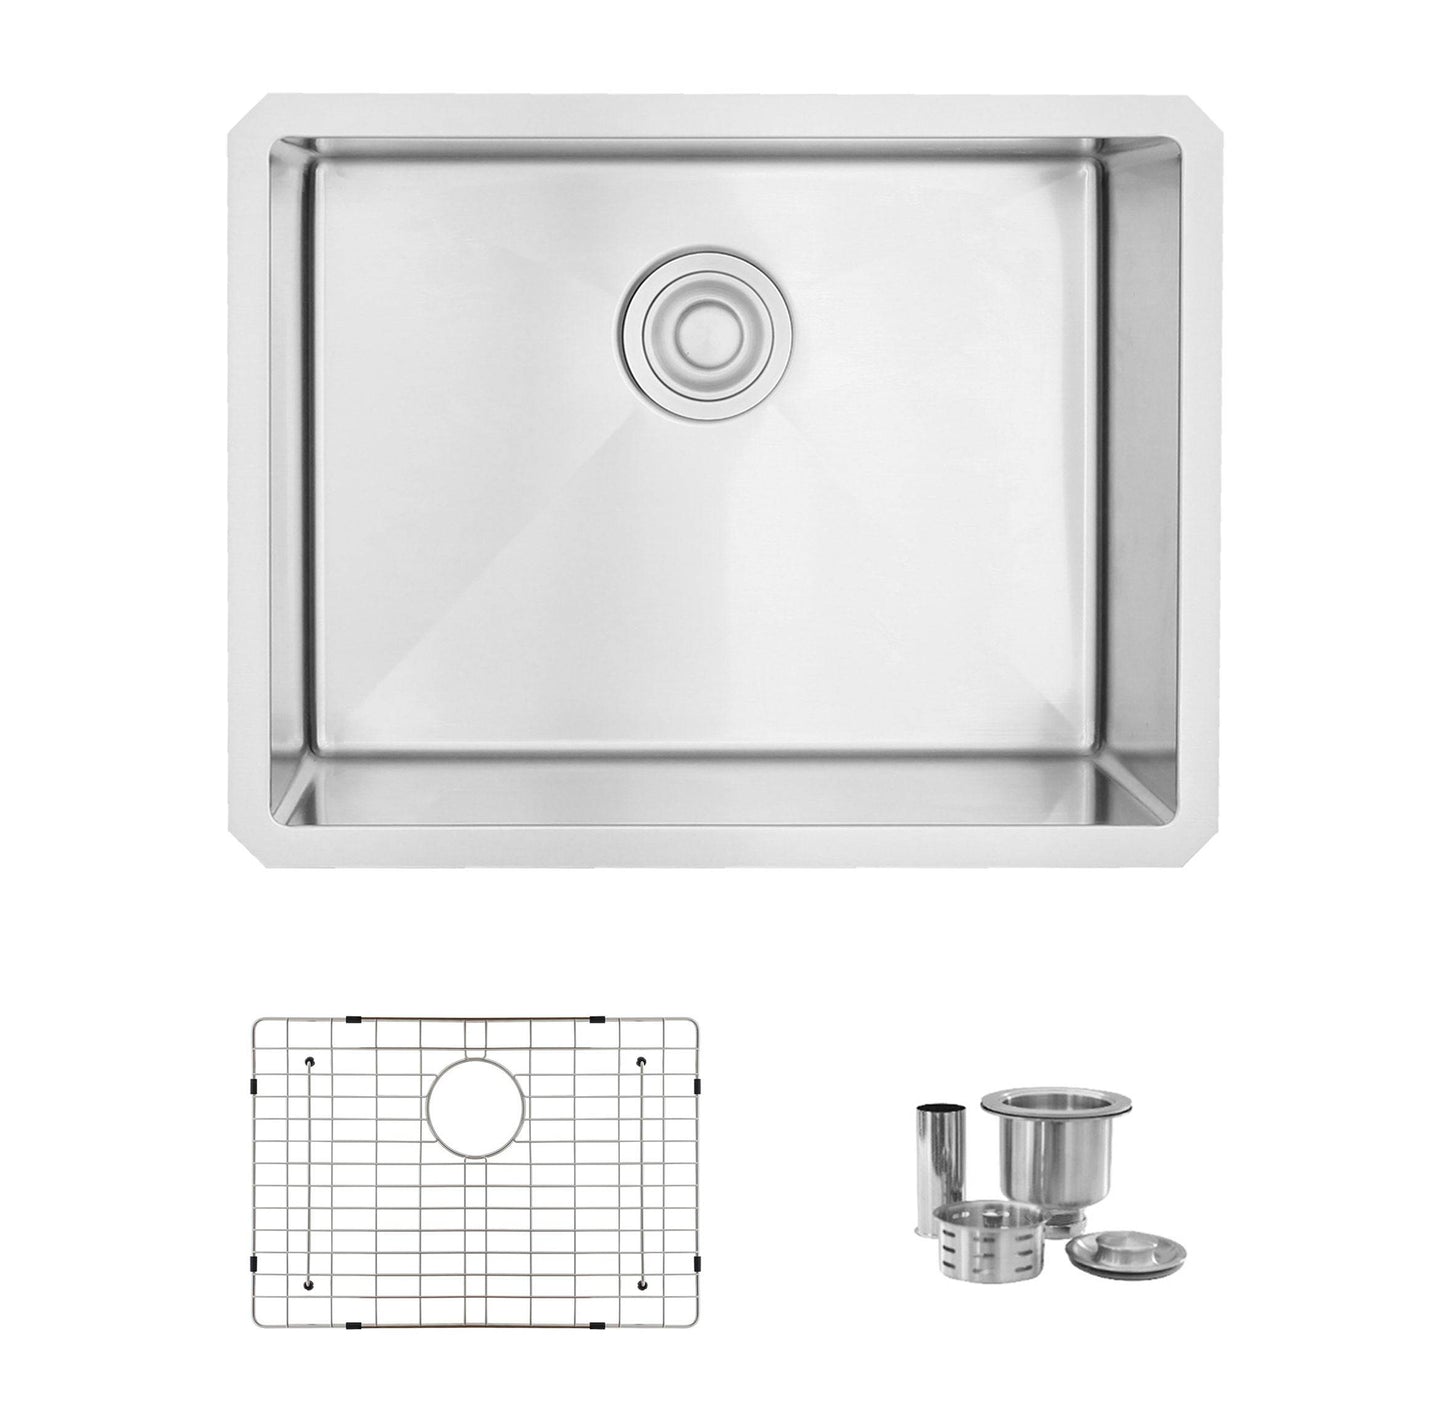 Stylish Citrine 23" x 18" Single Bowl Undermount Stainless Steel Kitchen Sink S-307XG